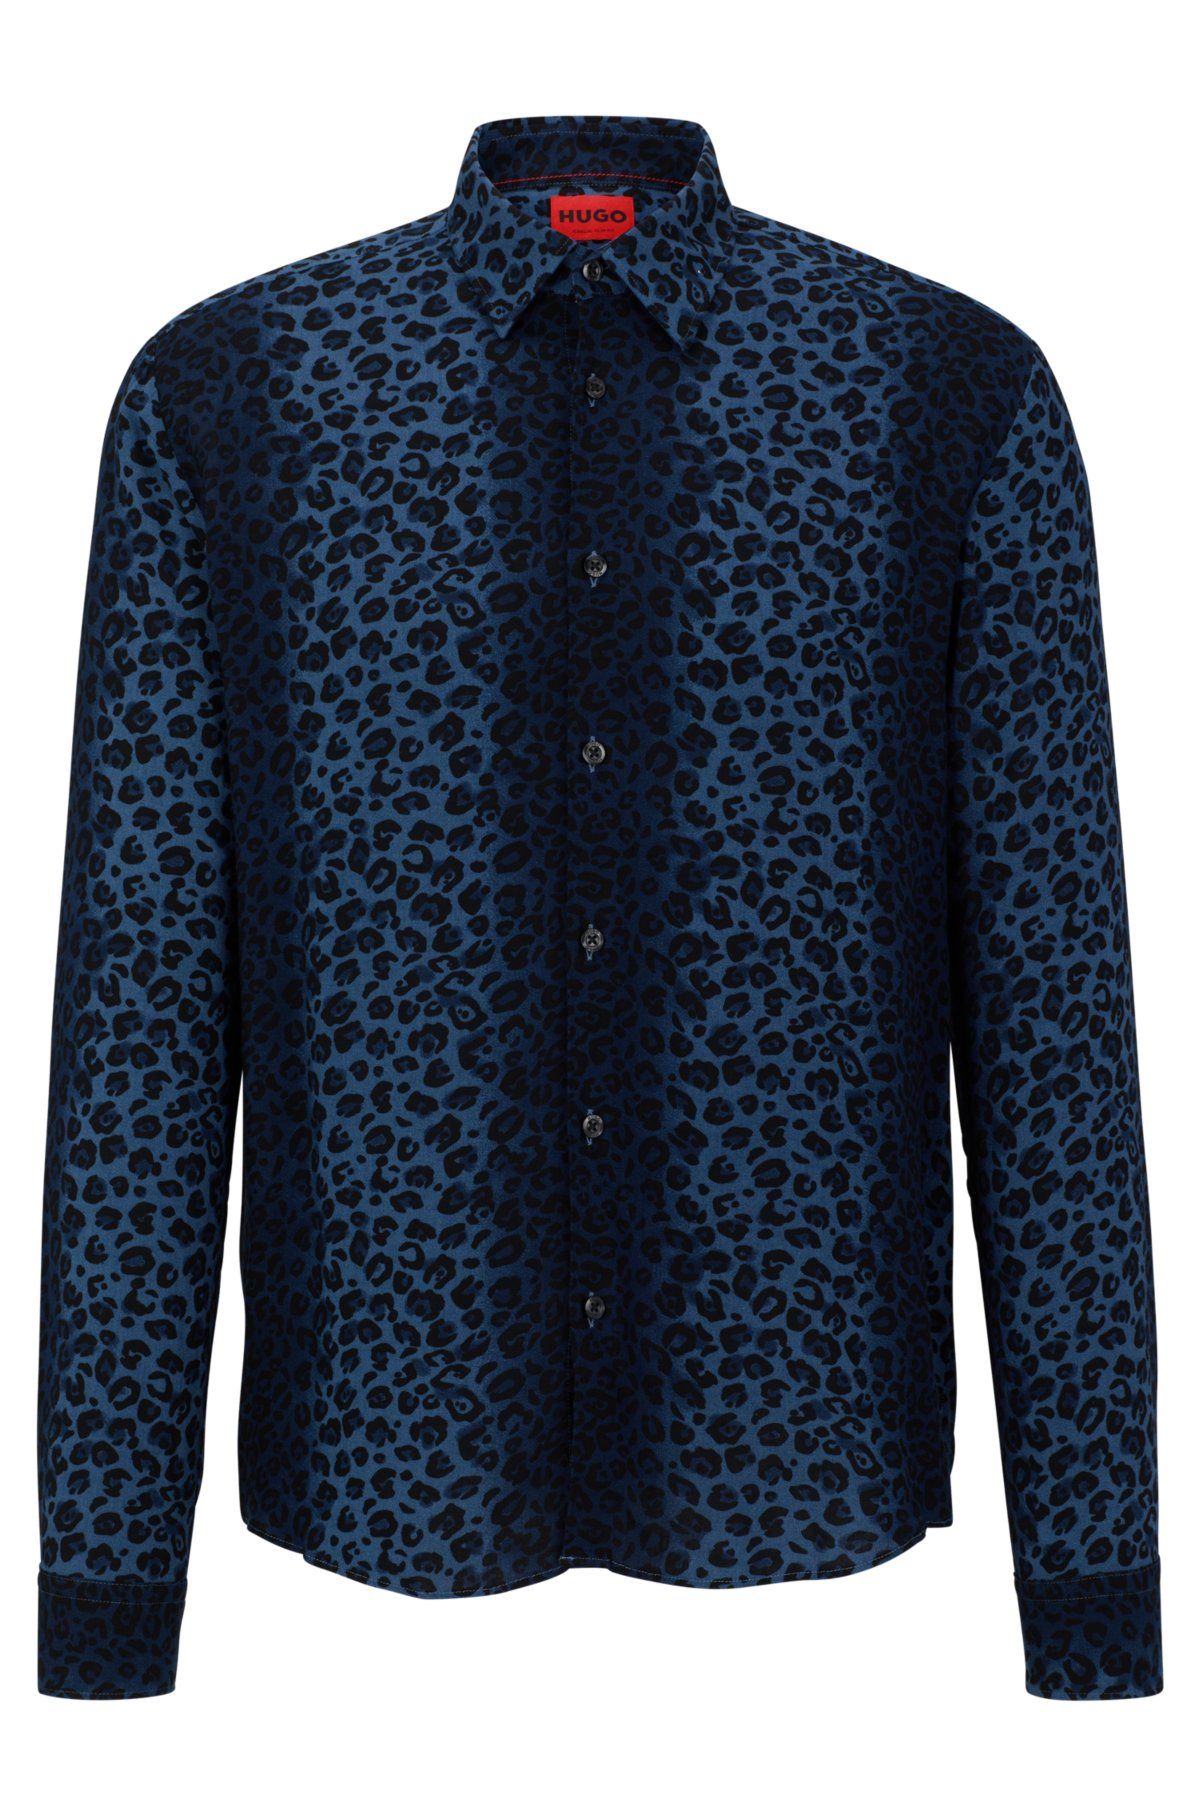 Leopard print men's shirt  Streetwear tshirt, Casual shirts